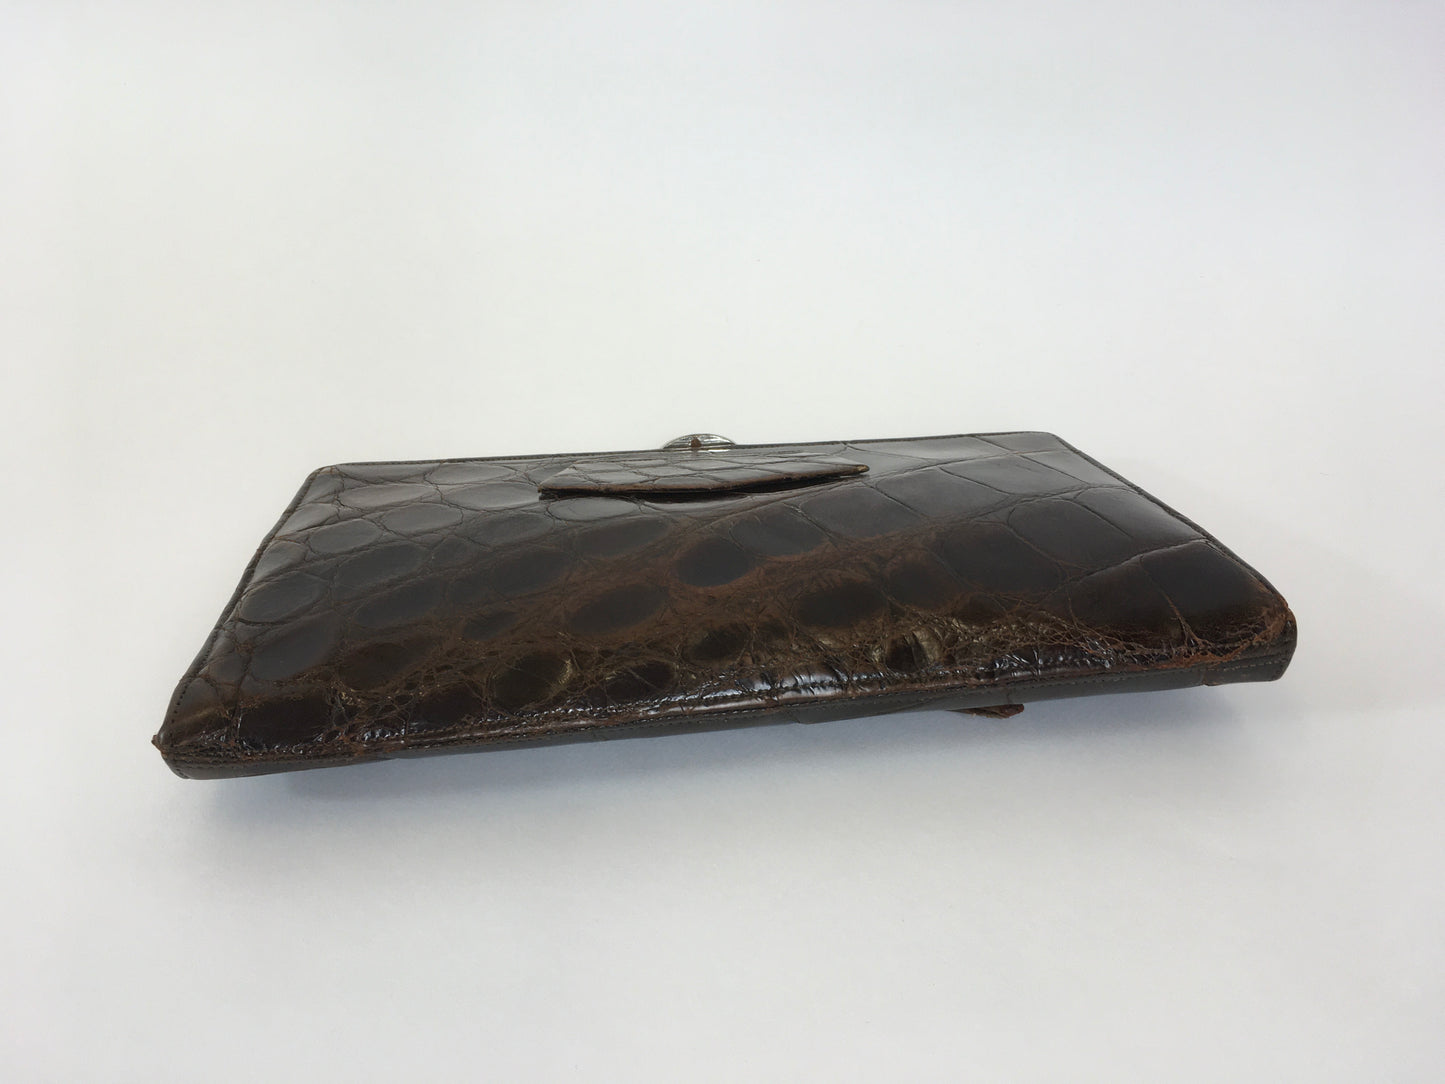 Original 1930’s Deco Crocodile Clutch Handbag - In A Warm Brown with Chrome Detailing